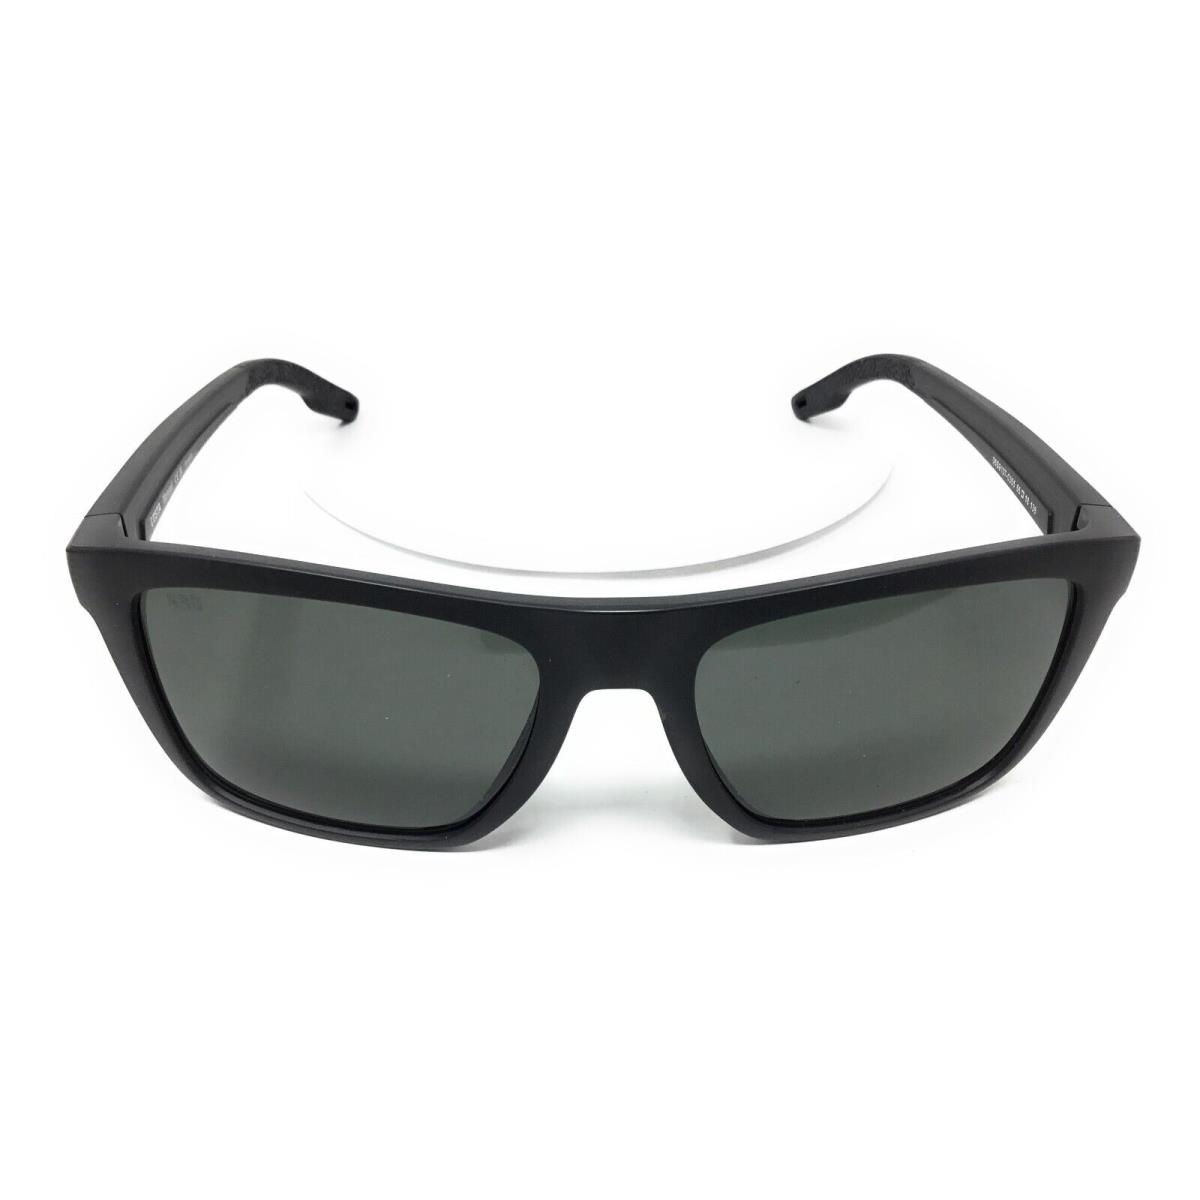 Costa Del Mar Mainsail Men`s Gray Polarized Sunglasses 6S9107 910703 55-18 - Frame: Black, Lens: Gray